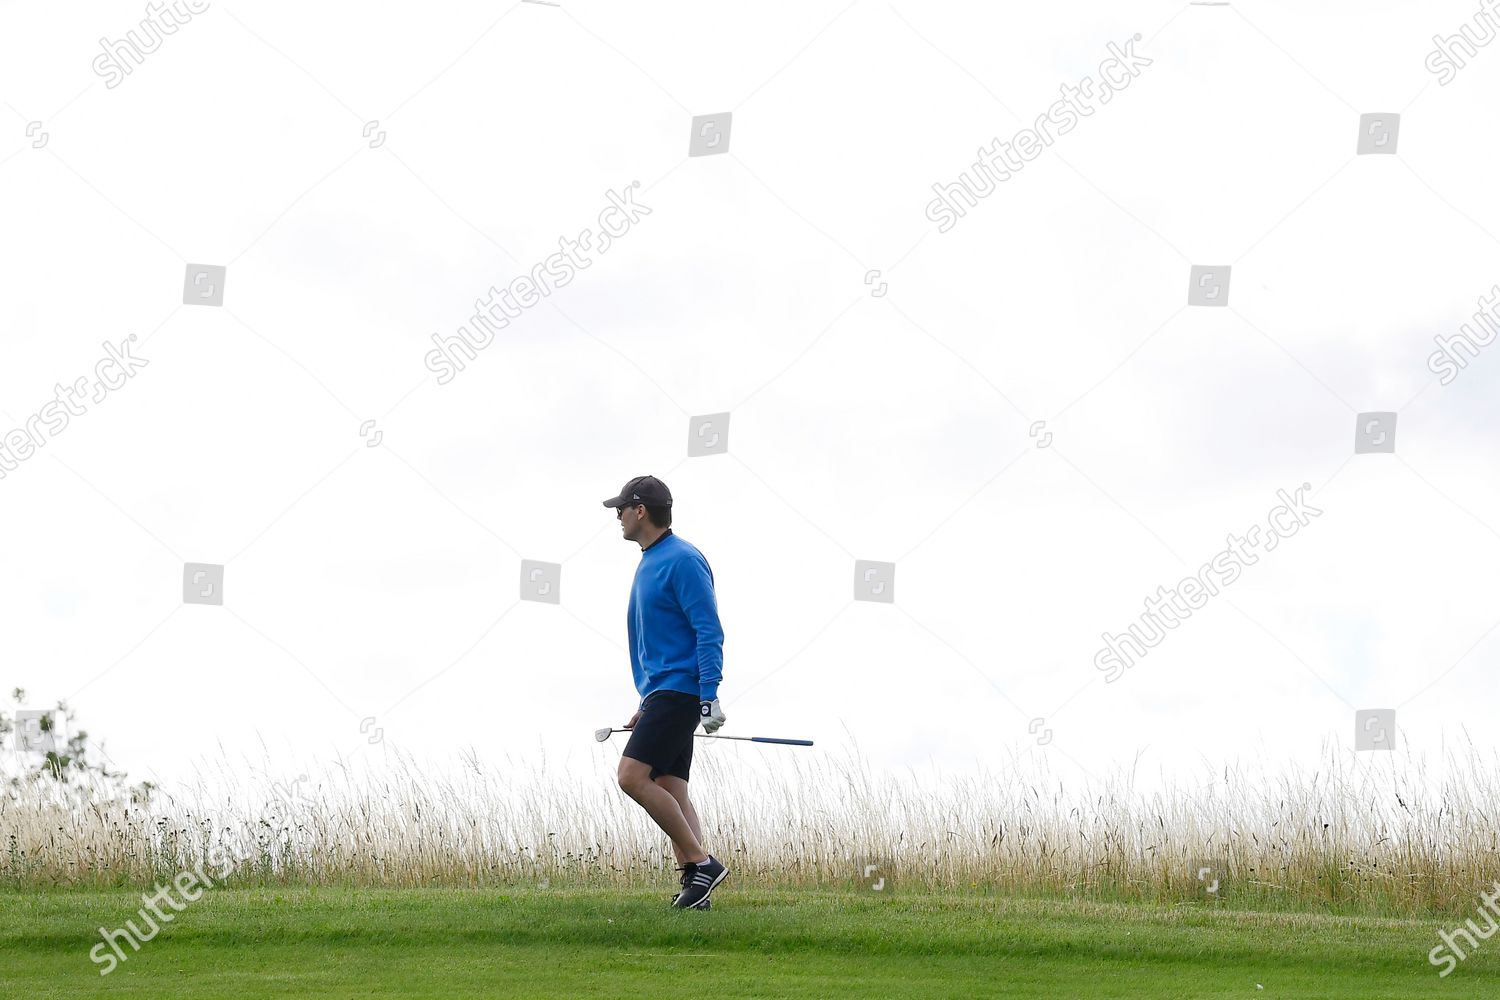 victoria-golf-tournament-borgholm-sweden-shutterstock-editorial-10709898m.jpg